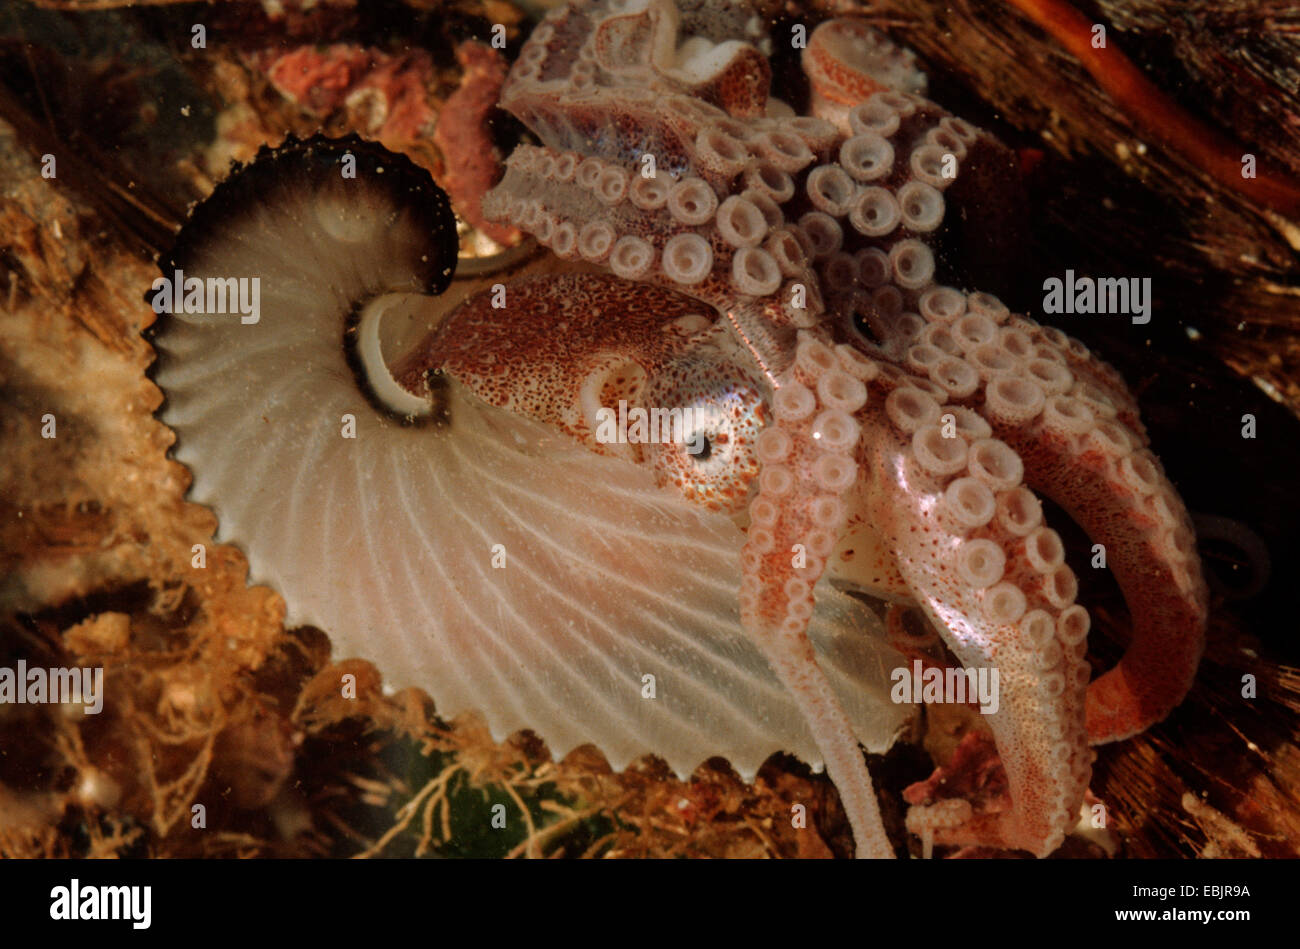 greater argonaut, common paper nautilus (Argonauta argo), at the sea ground Stock Photo